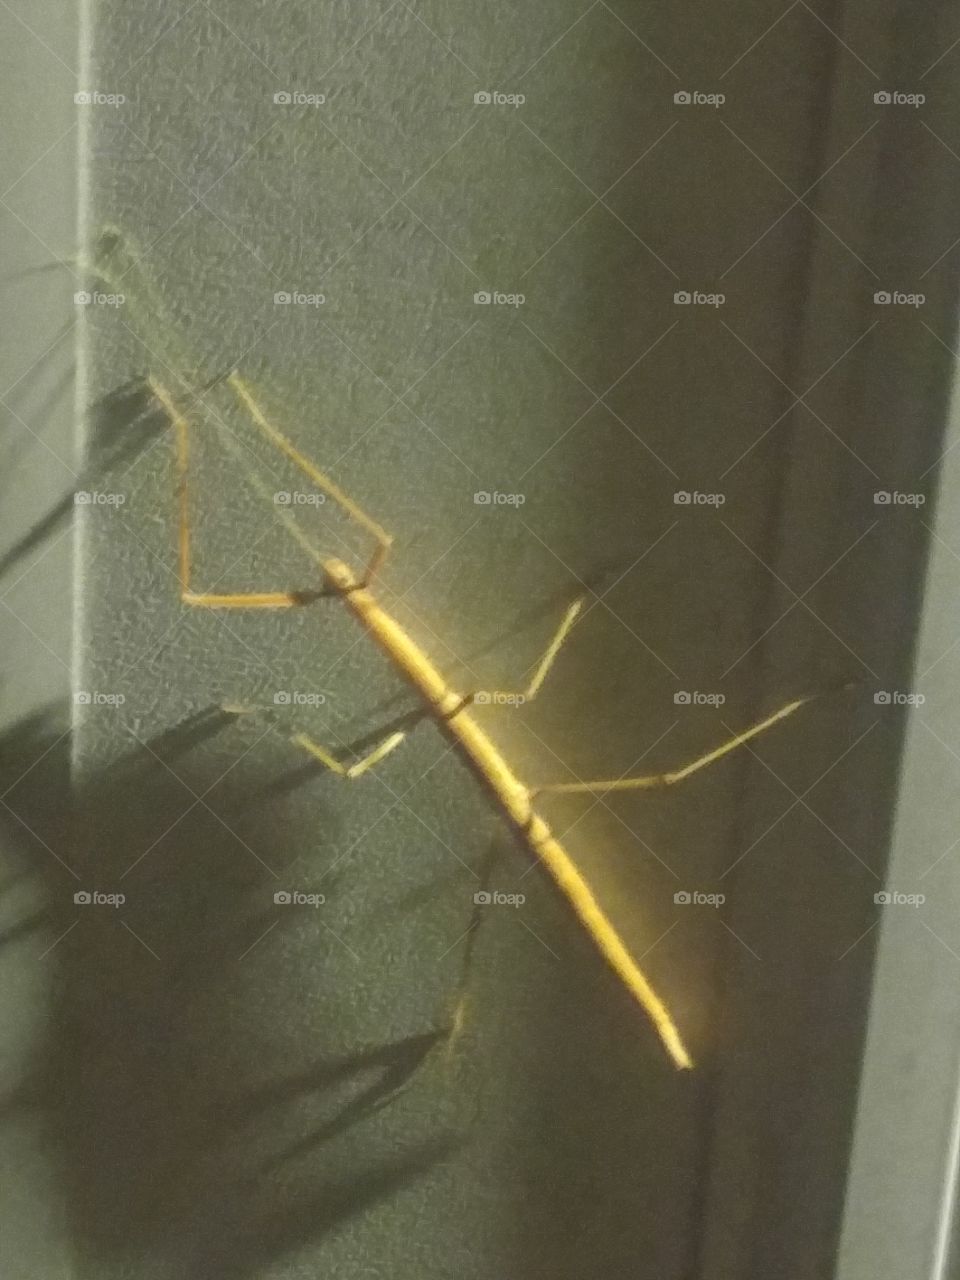 A stick bug.